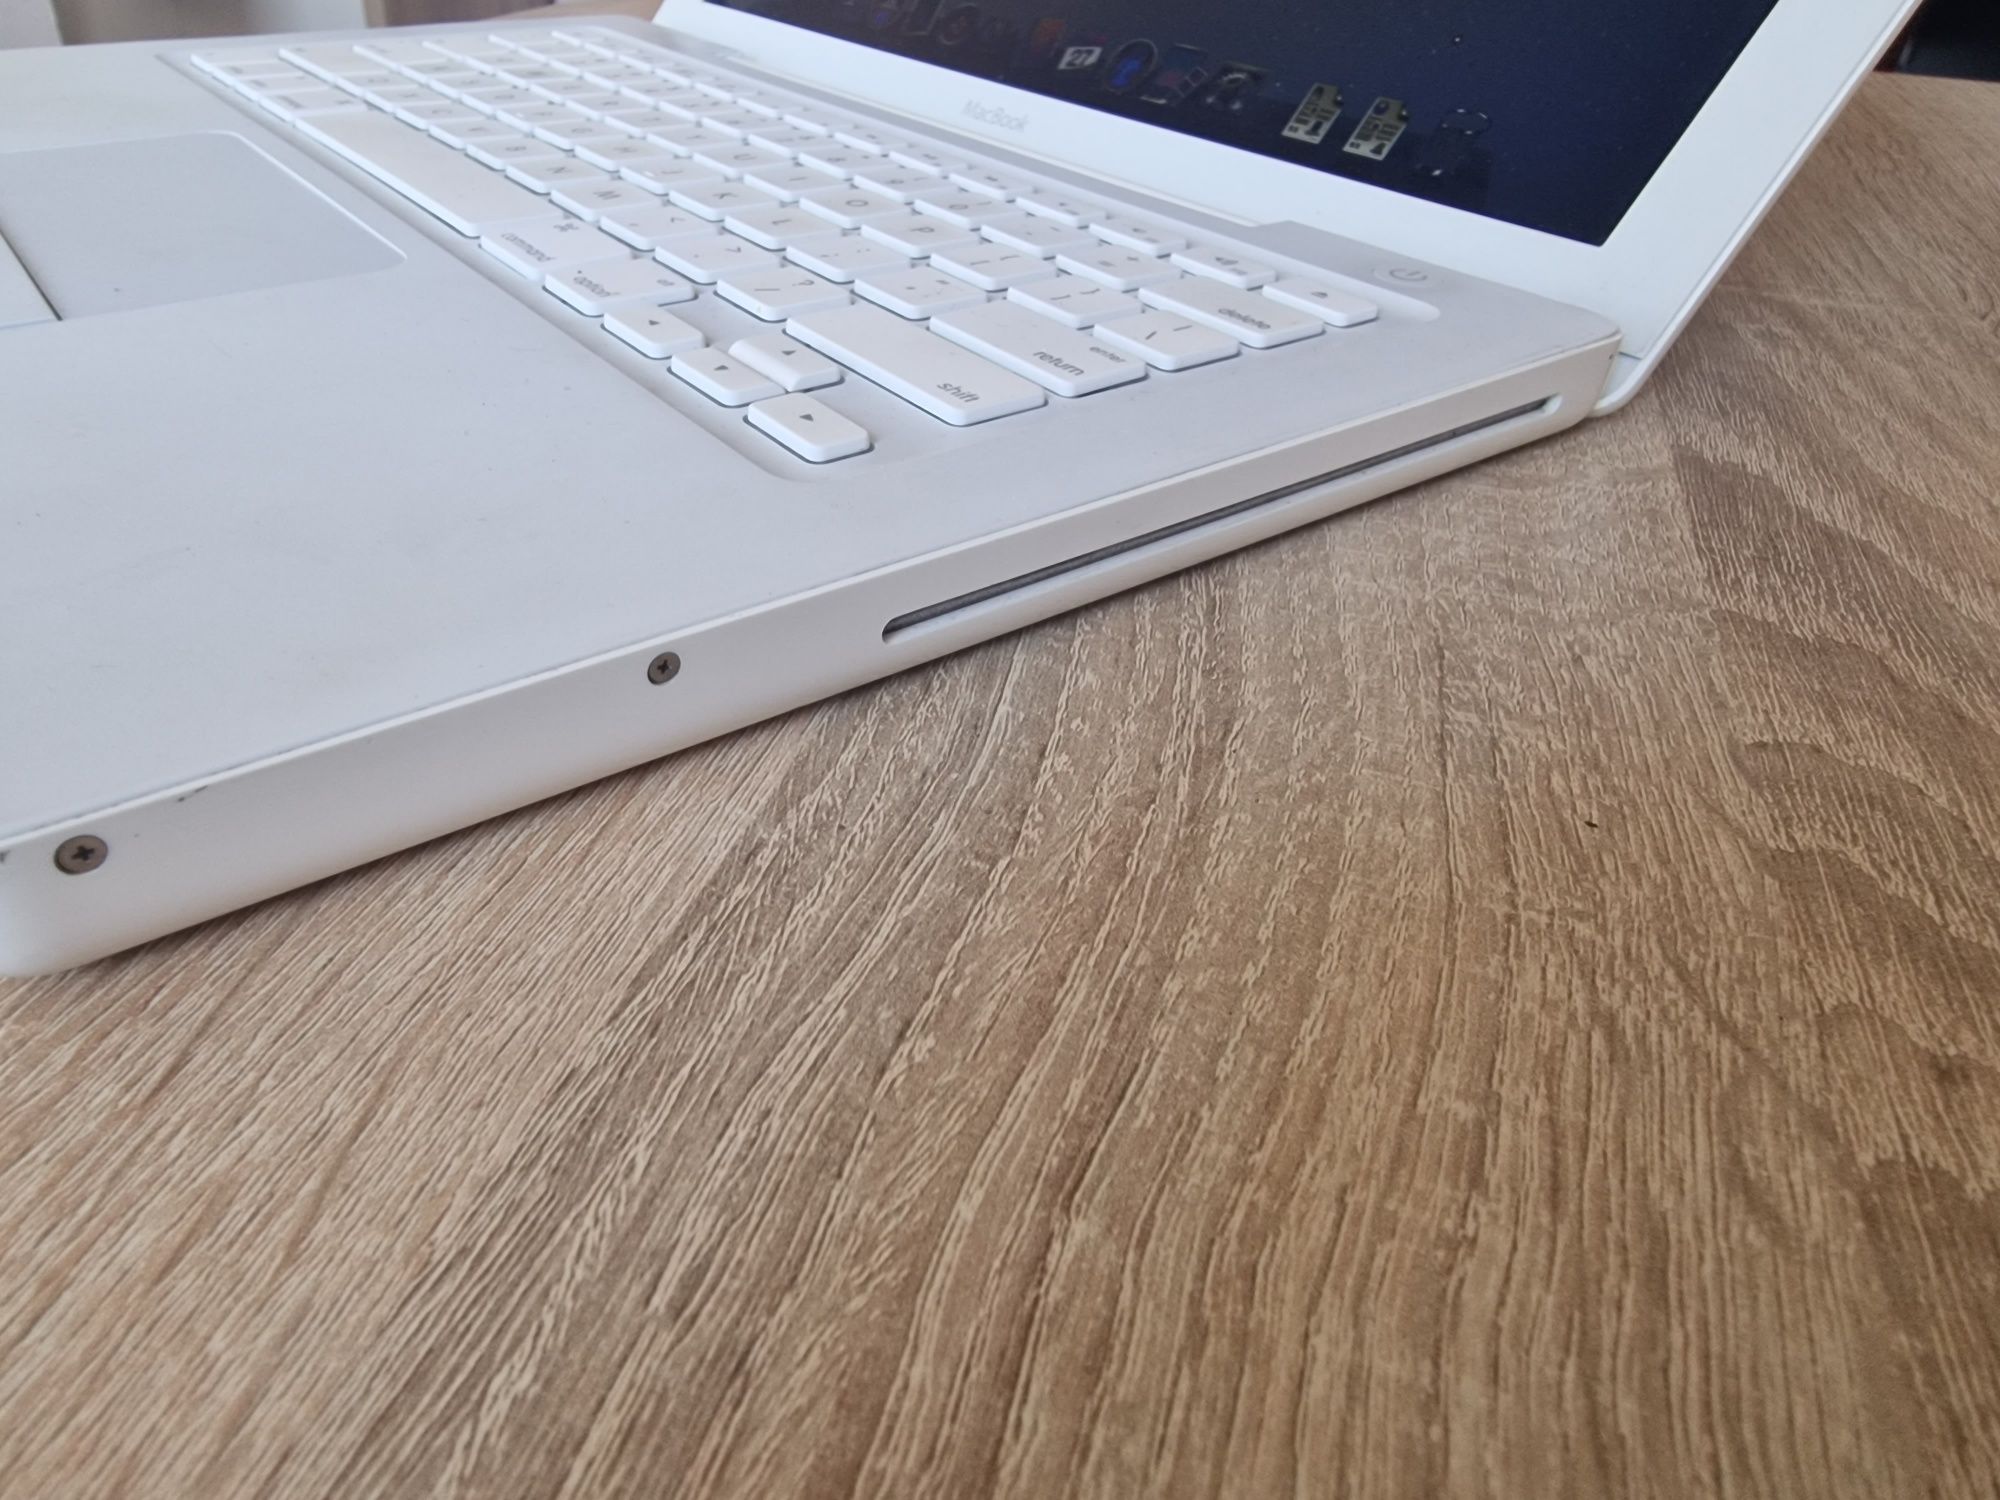 Apple MacBook 2008 13-Inch White